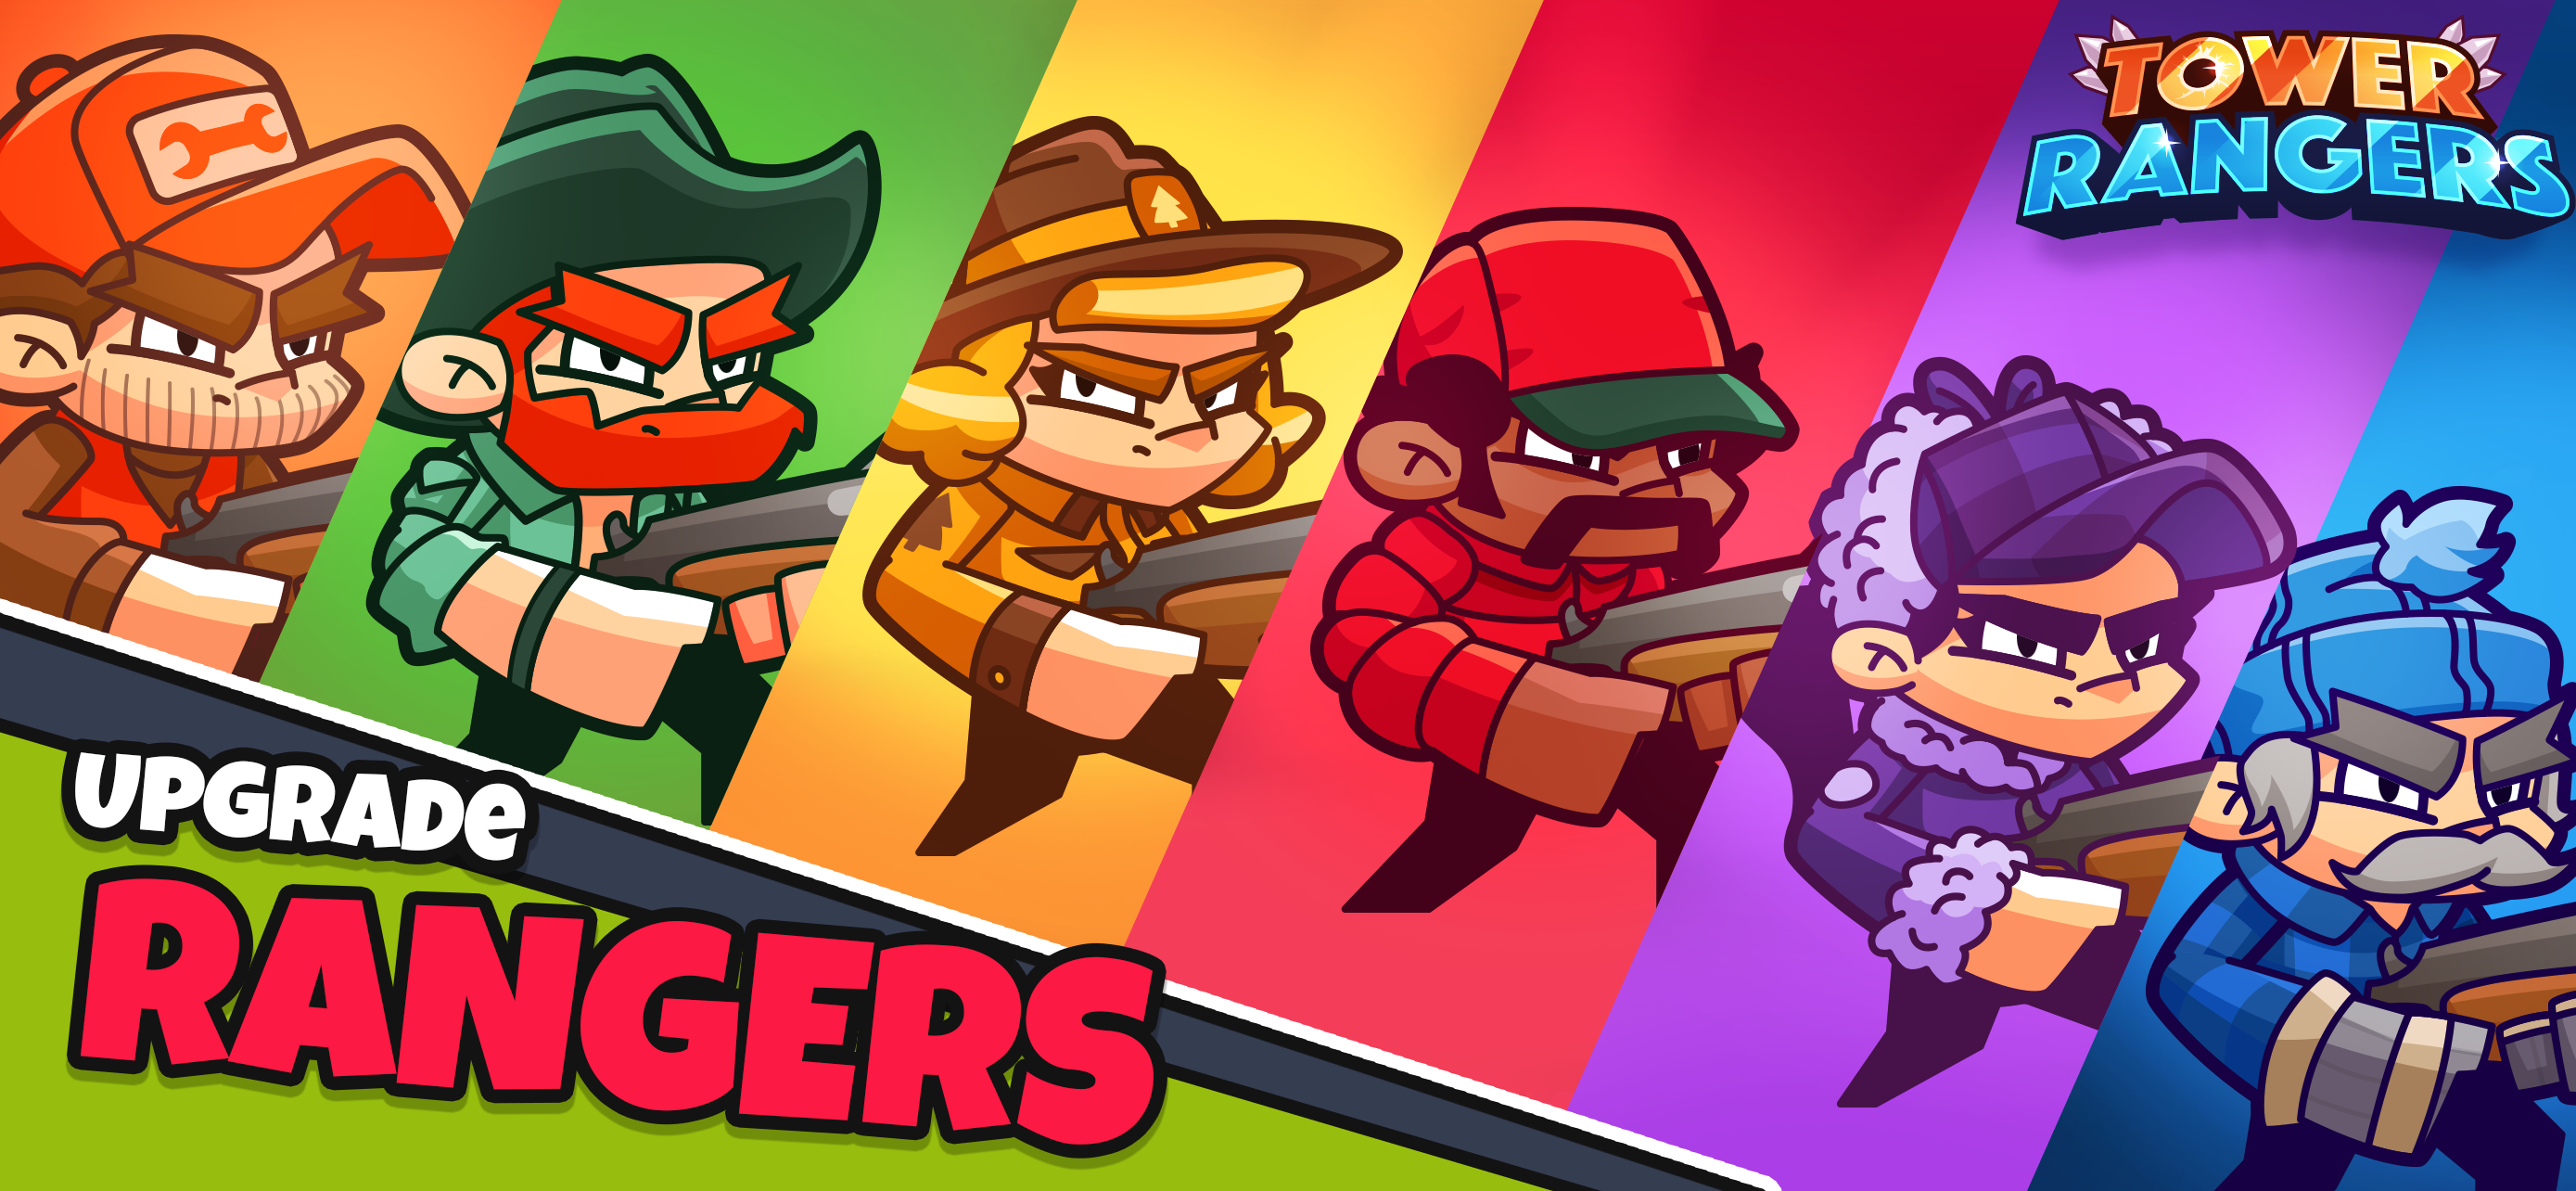 Tower Rangers screenshot game